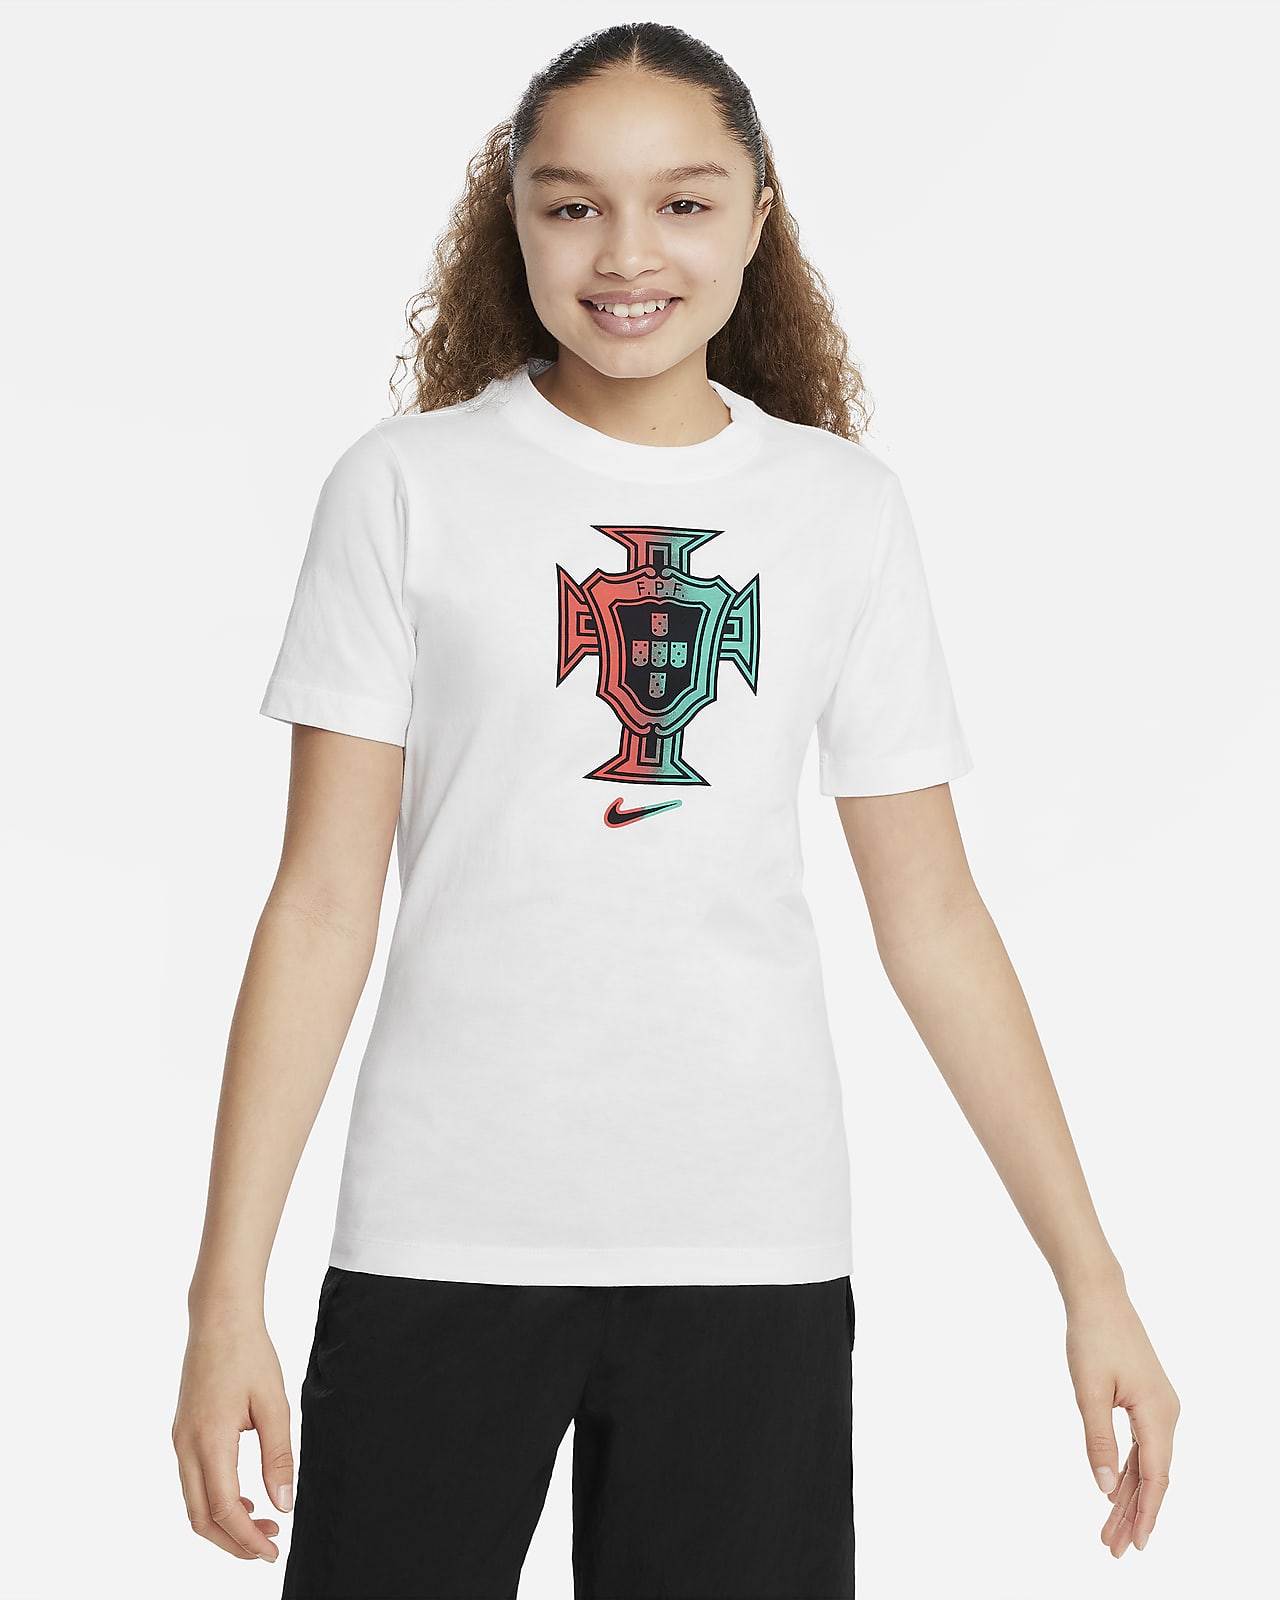 T-shirt Nike Football Portugal pour ado